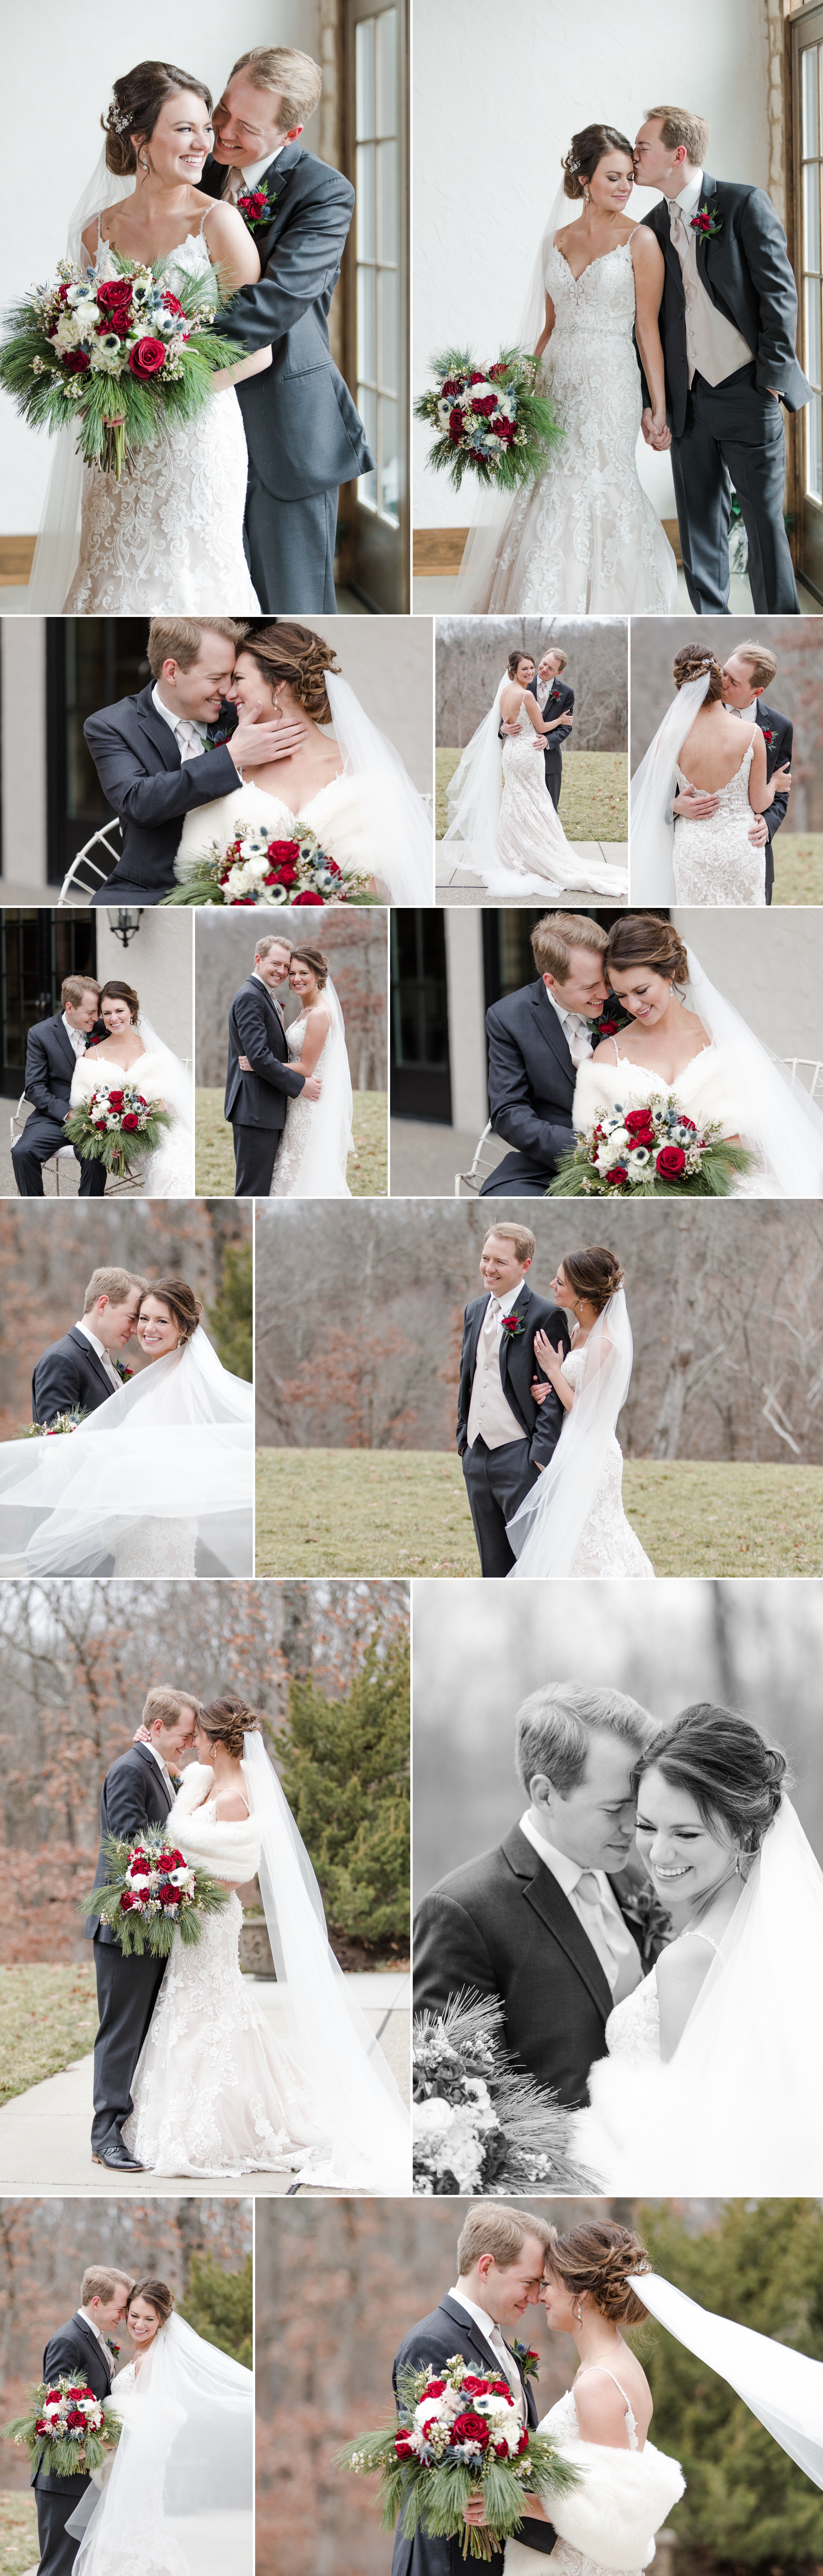 Silver Oaks Chateau Bride and Groom Dress Tux Veil Winter Wedding Photogenics on Location